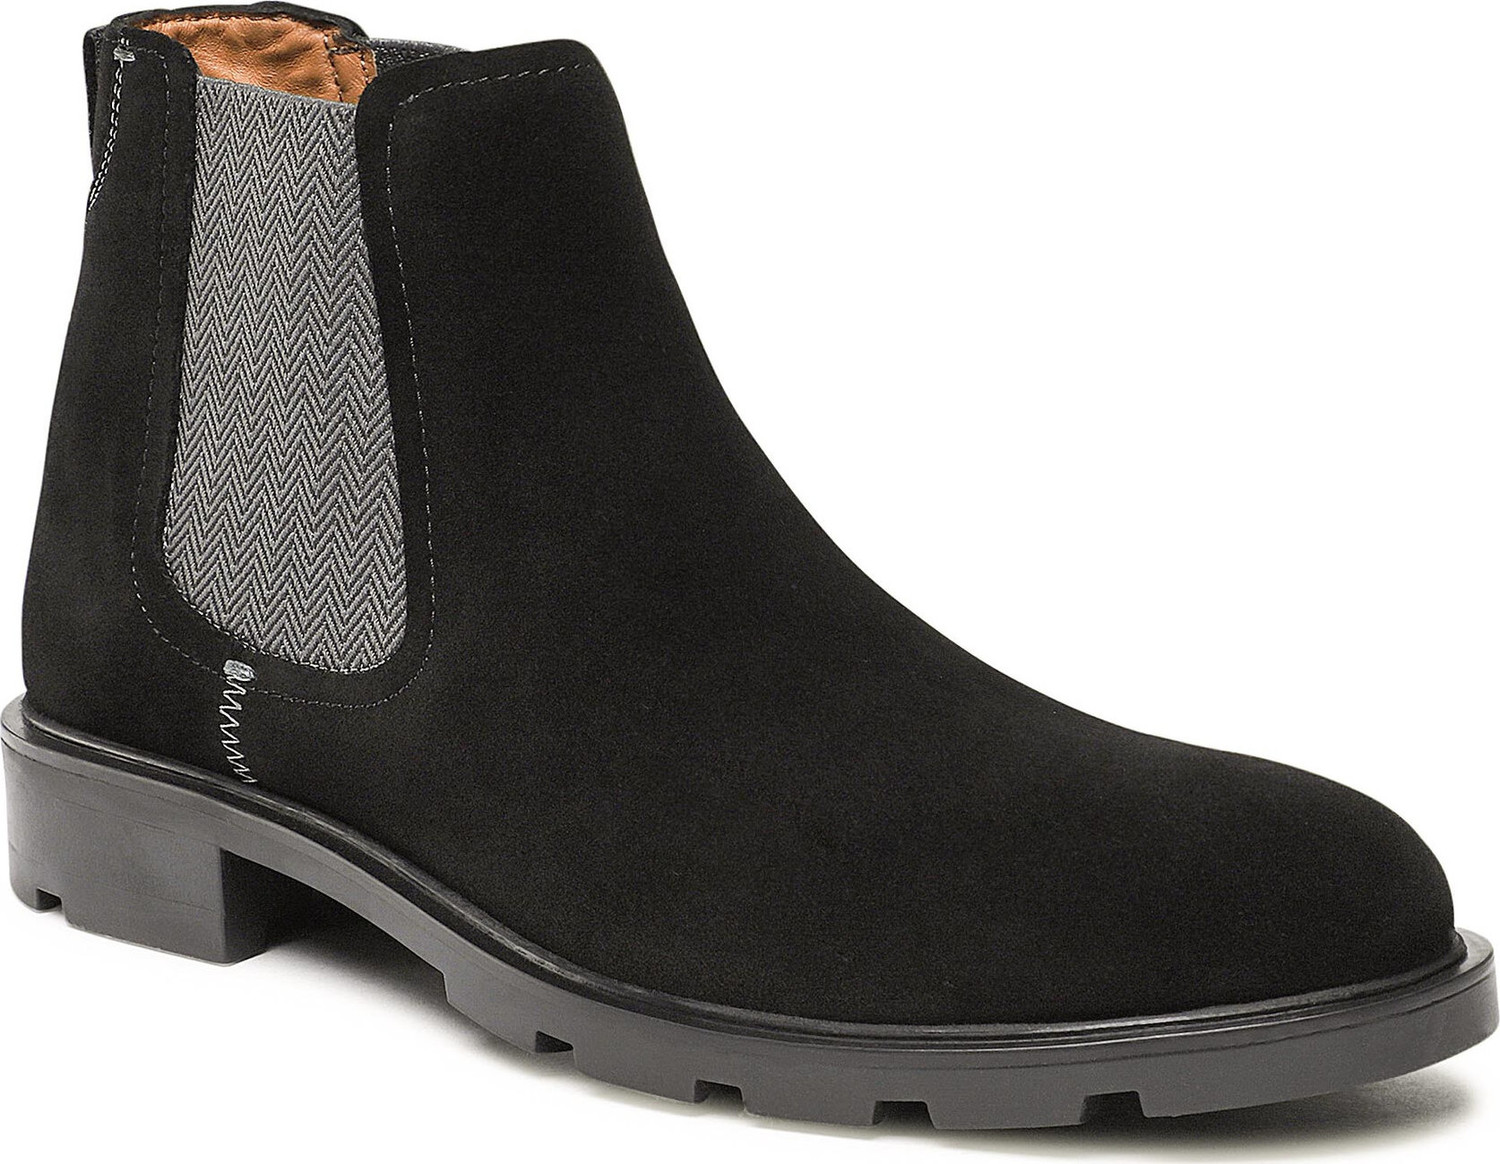 Kotníková obuv s elastickým prvkem Gino Rossi MI07-B252-B89-04 Black